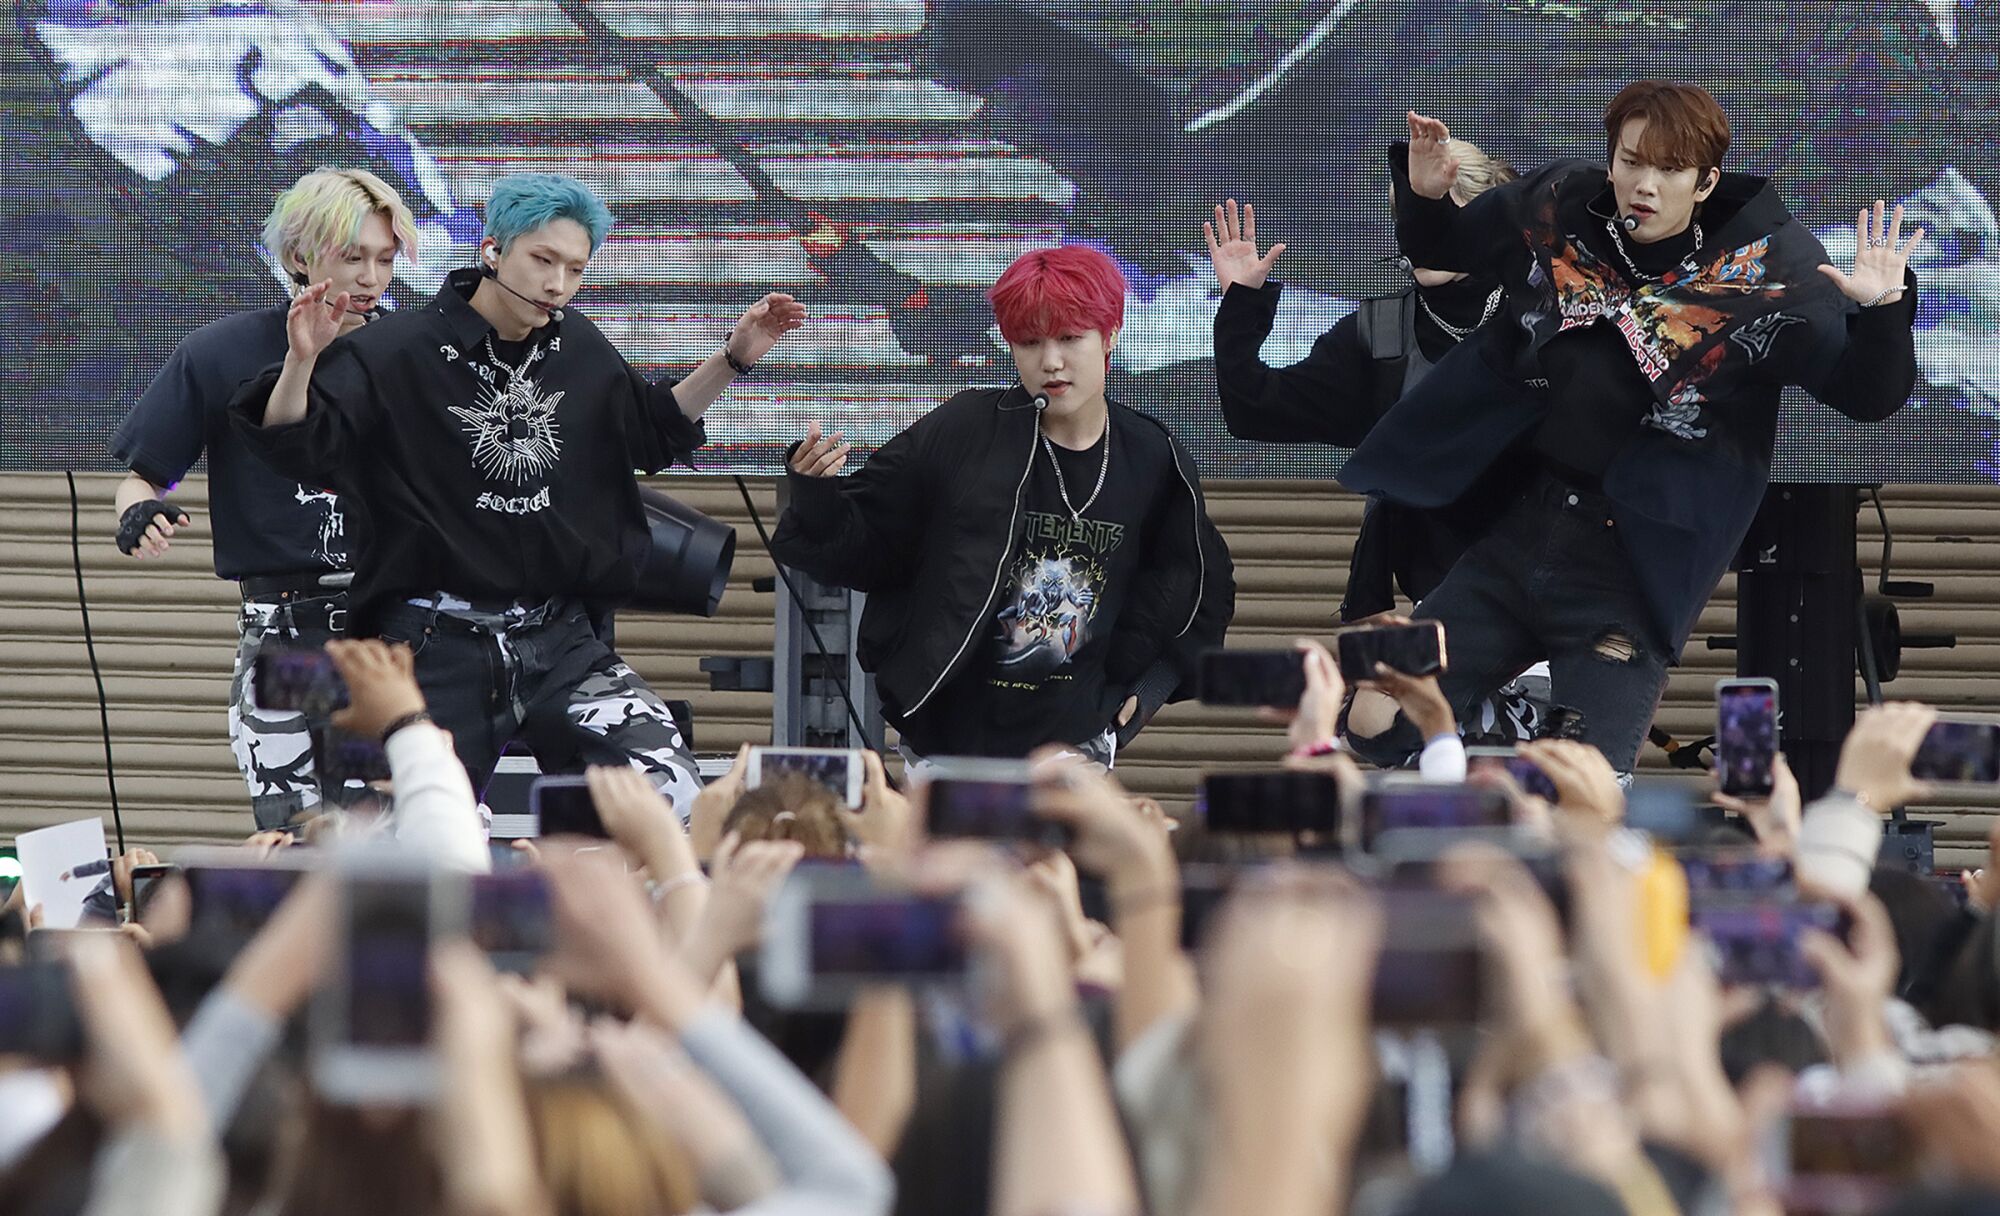 South Korean boy band P1Harmony, the headliner of the K-pop cover dance festival in Balboa Park on Saturday.